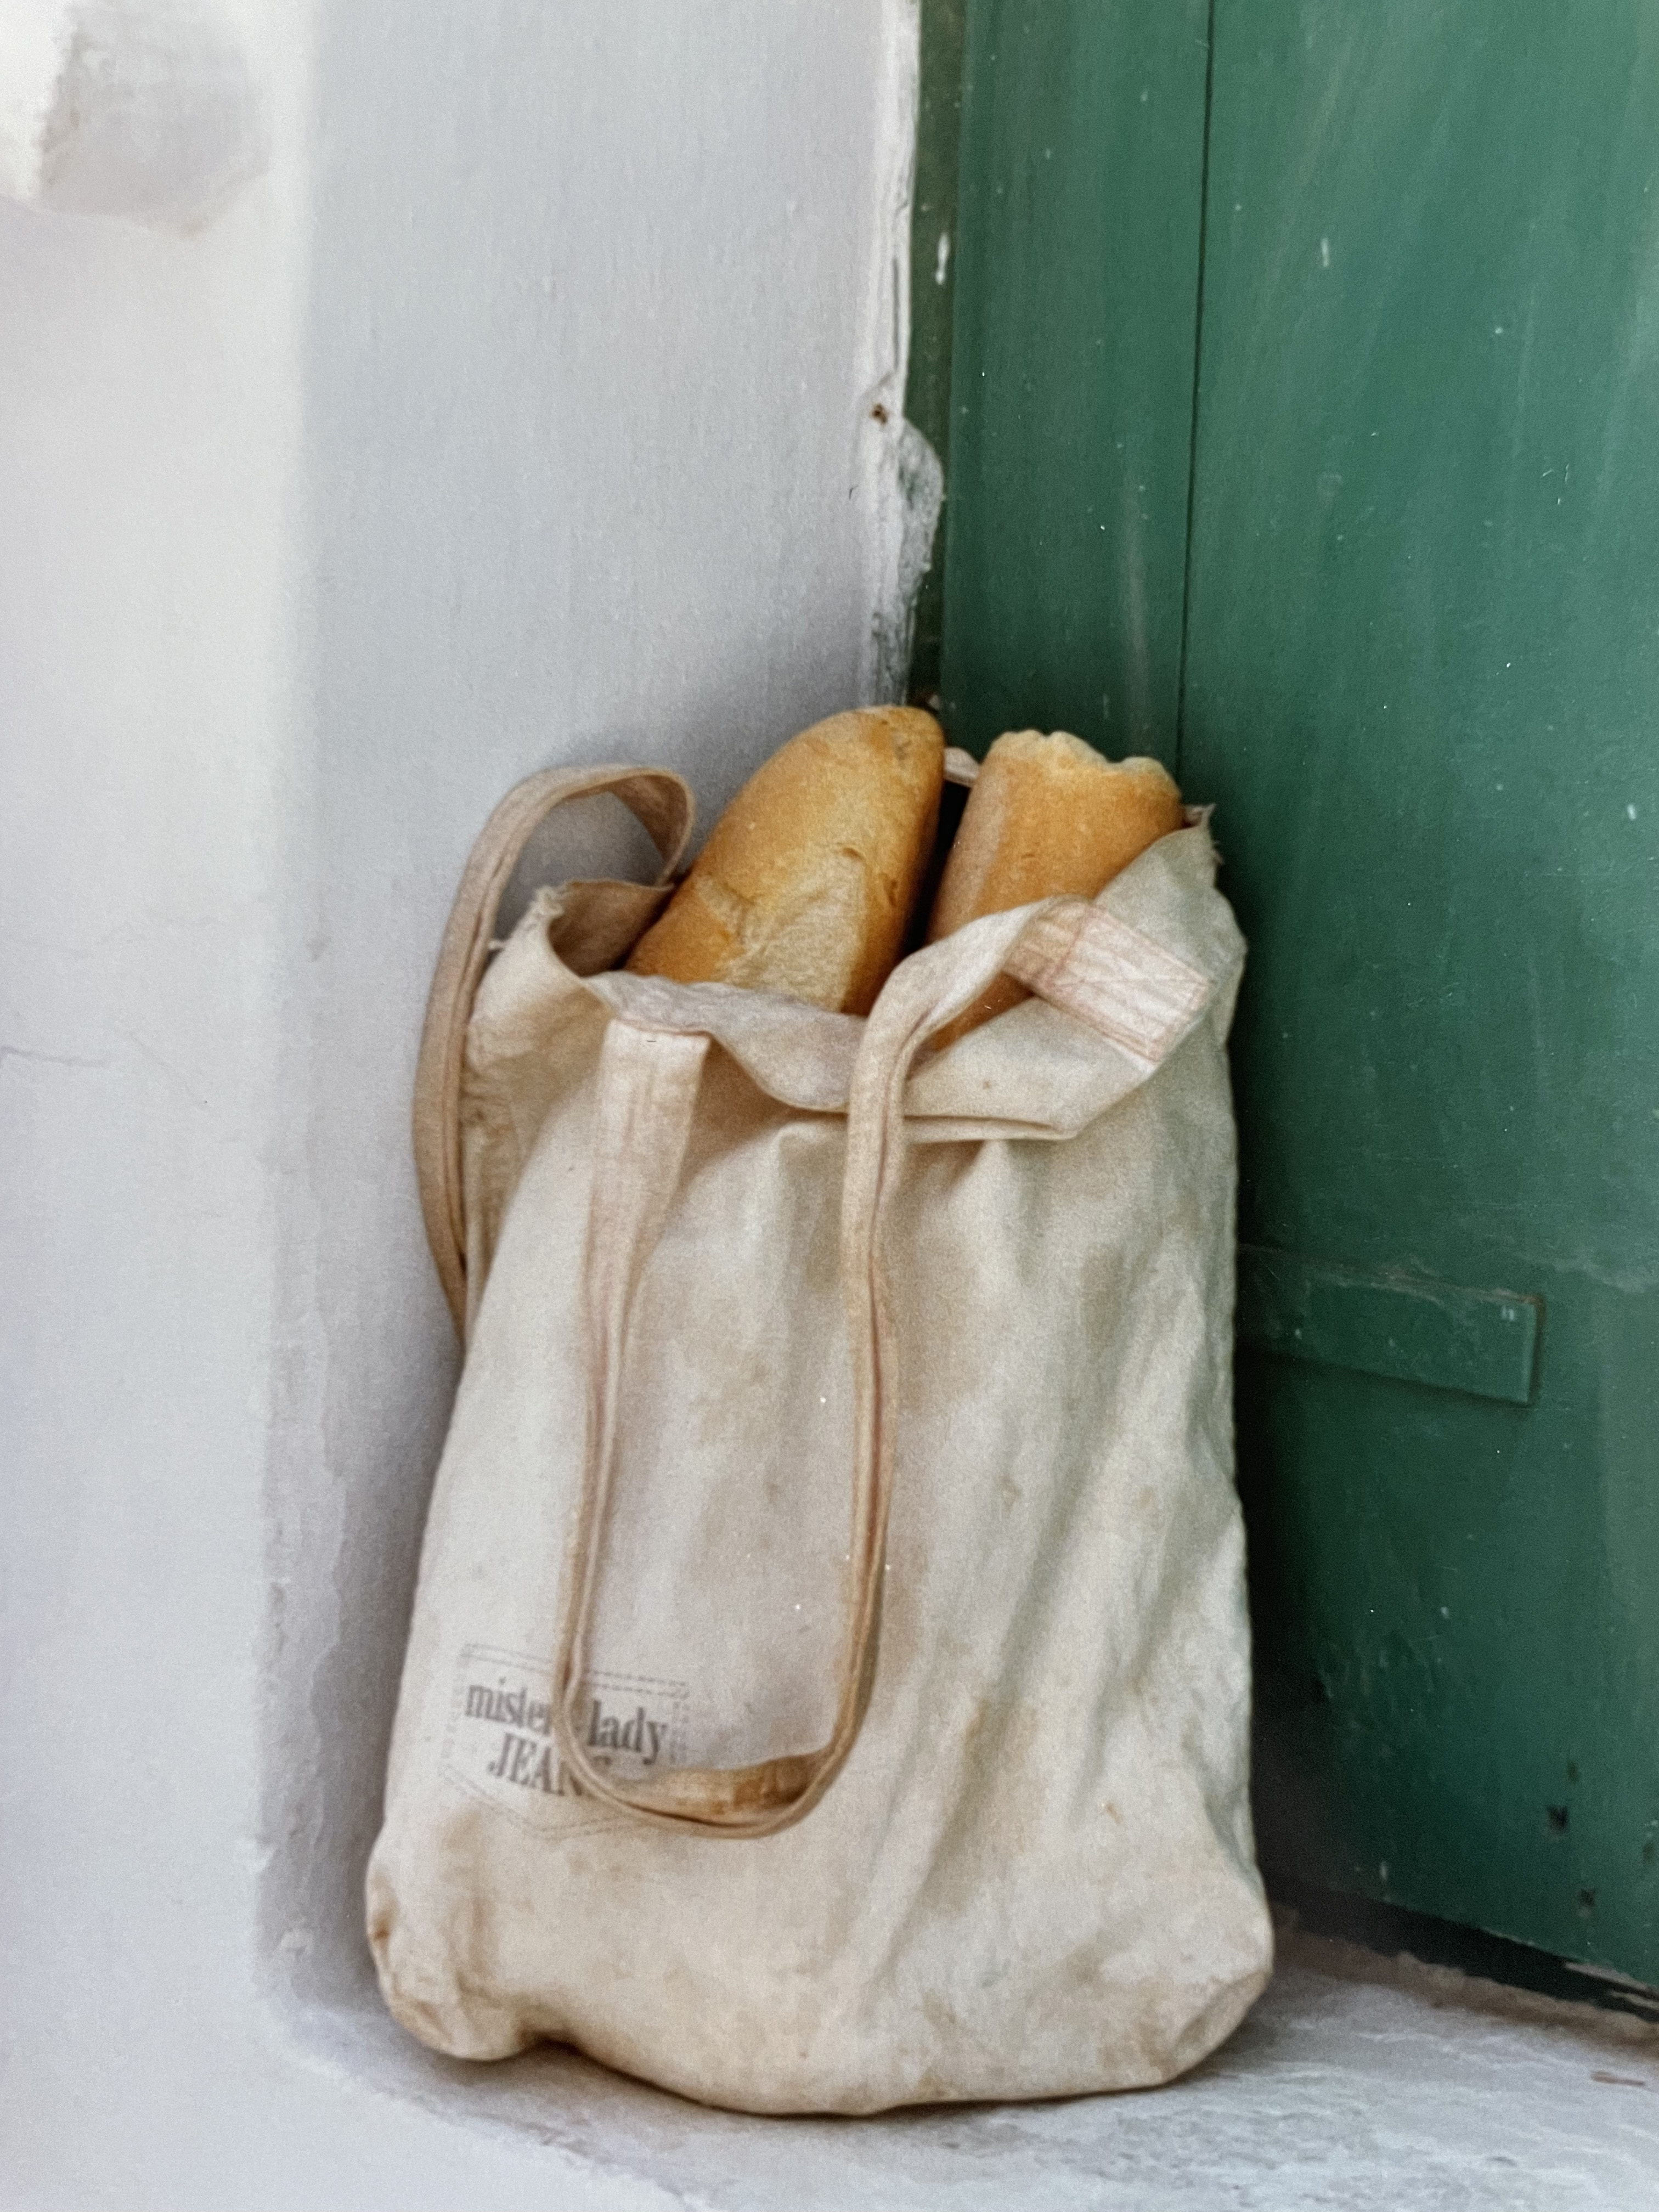 An image of fresh baked bread from the Langatha Bakery. Lankada, Langada, Amorgos